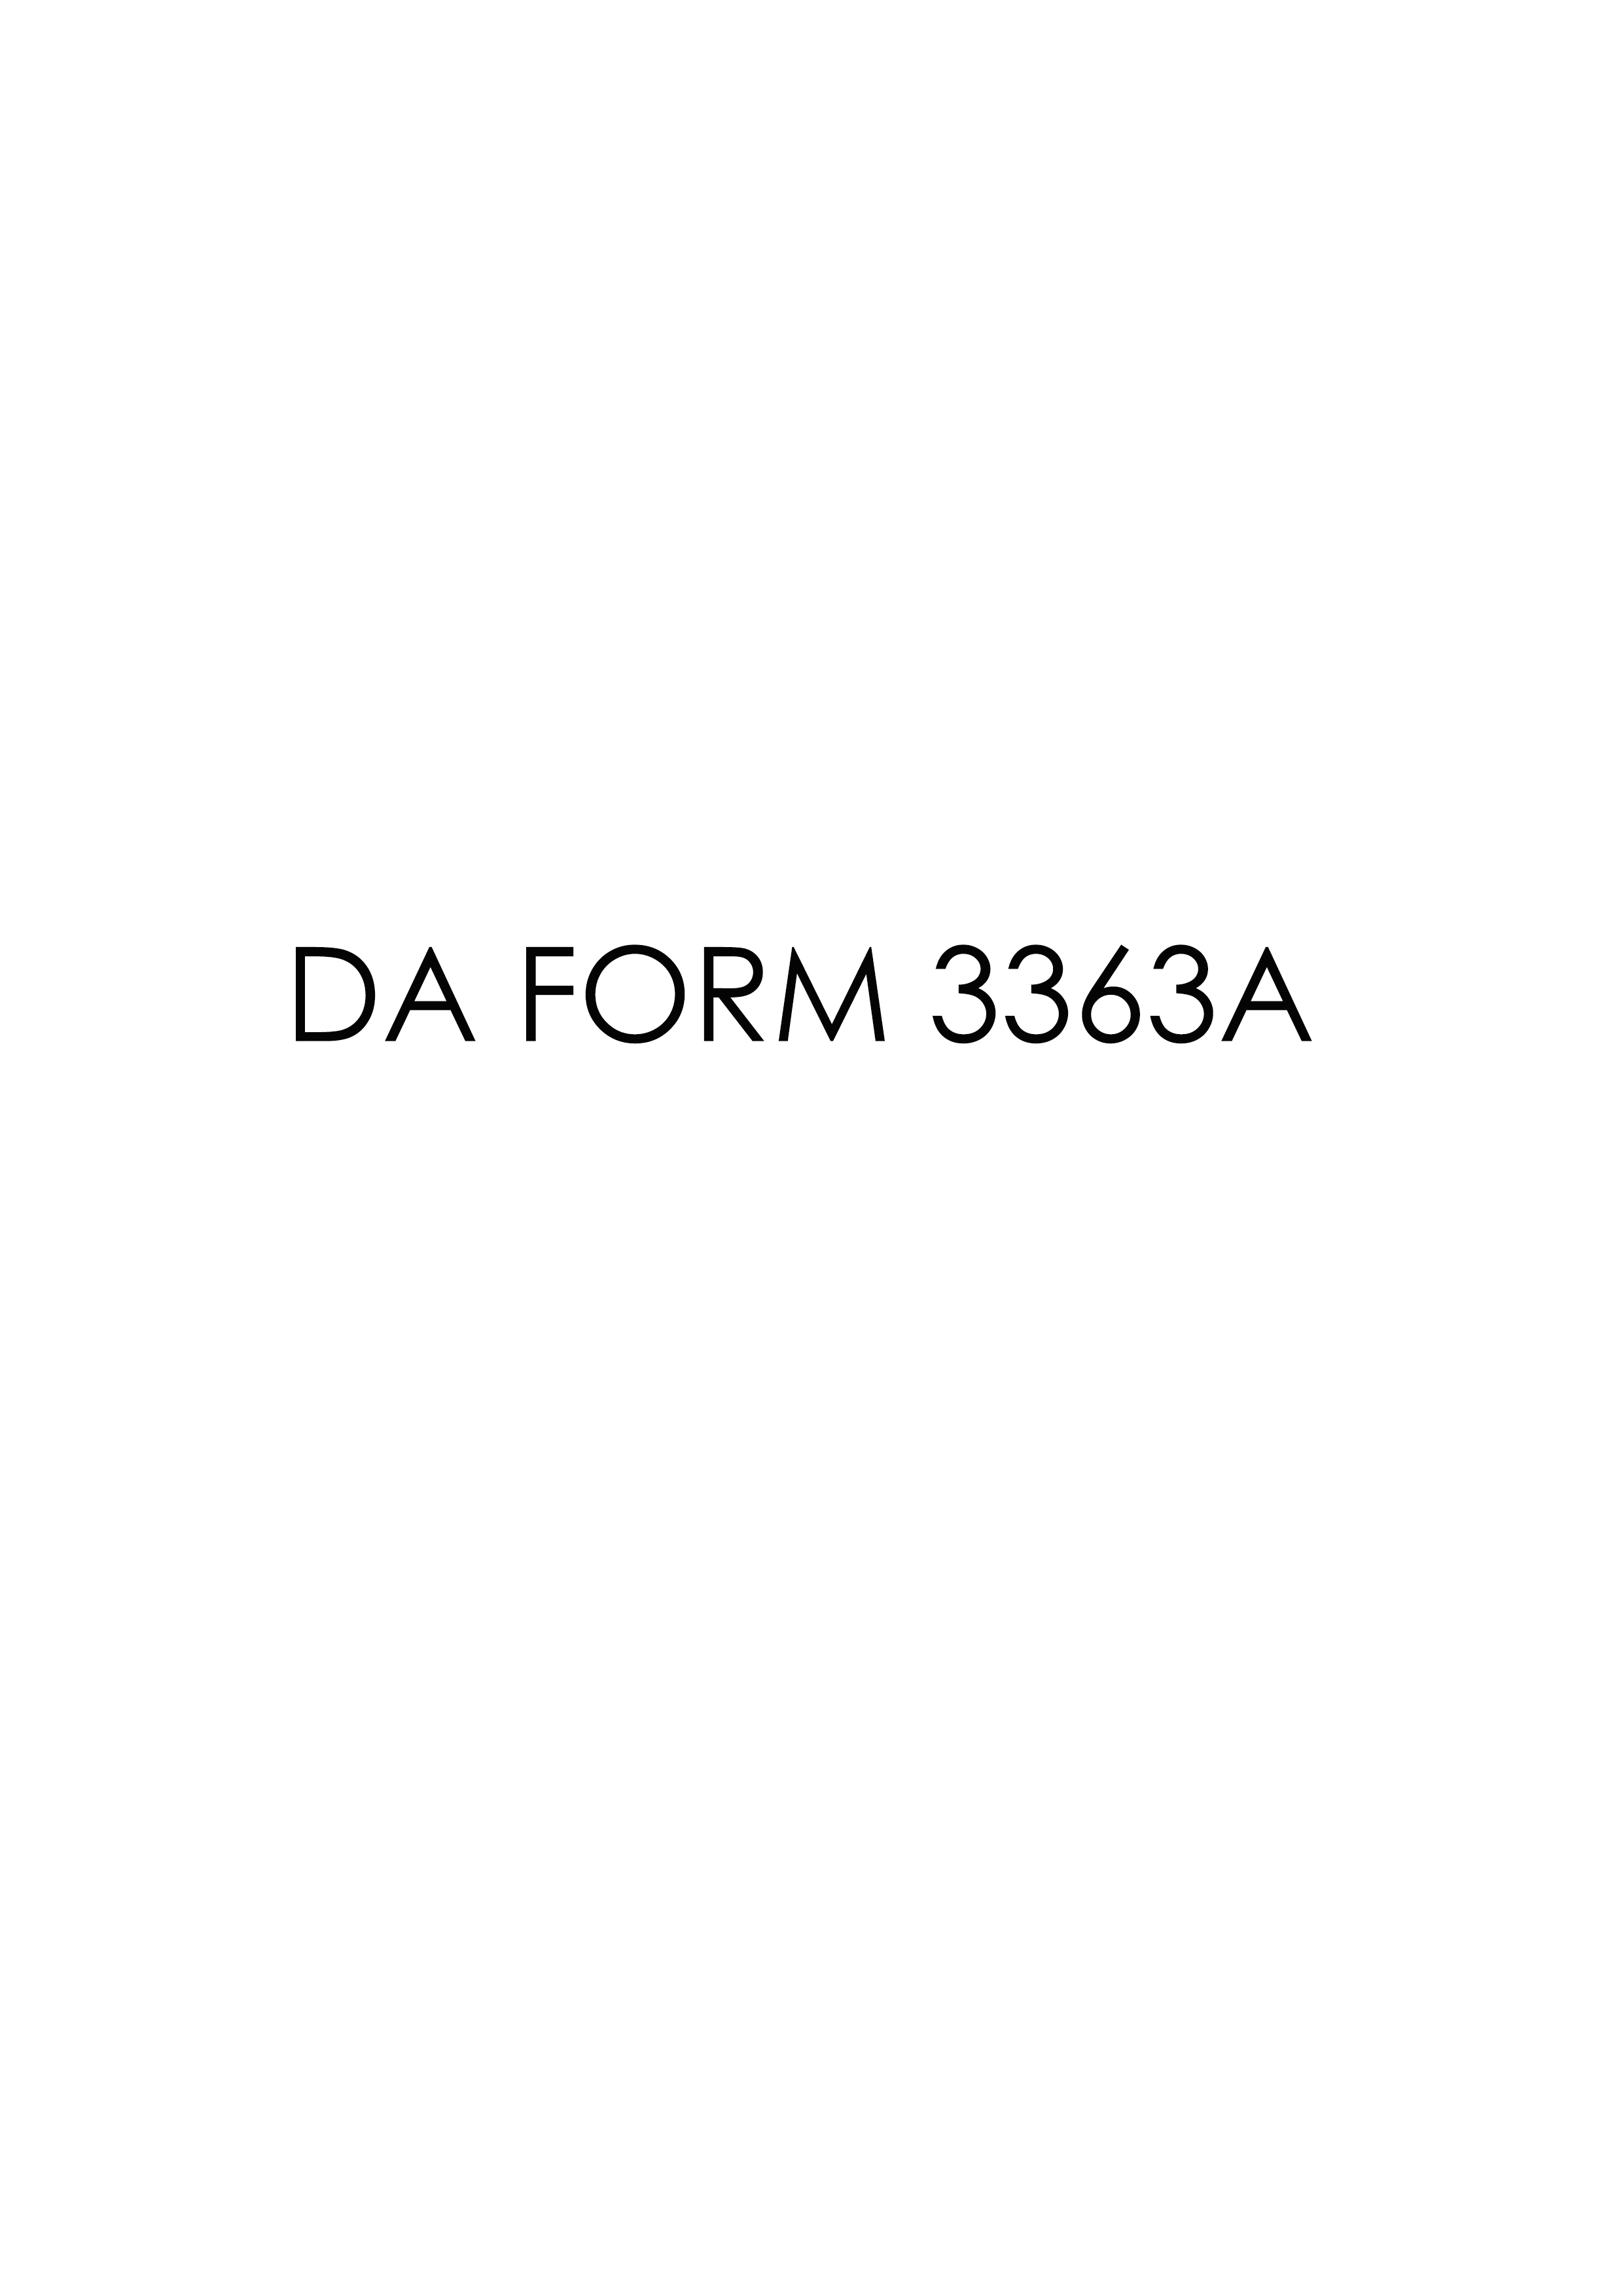 da Form 3363A fillable